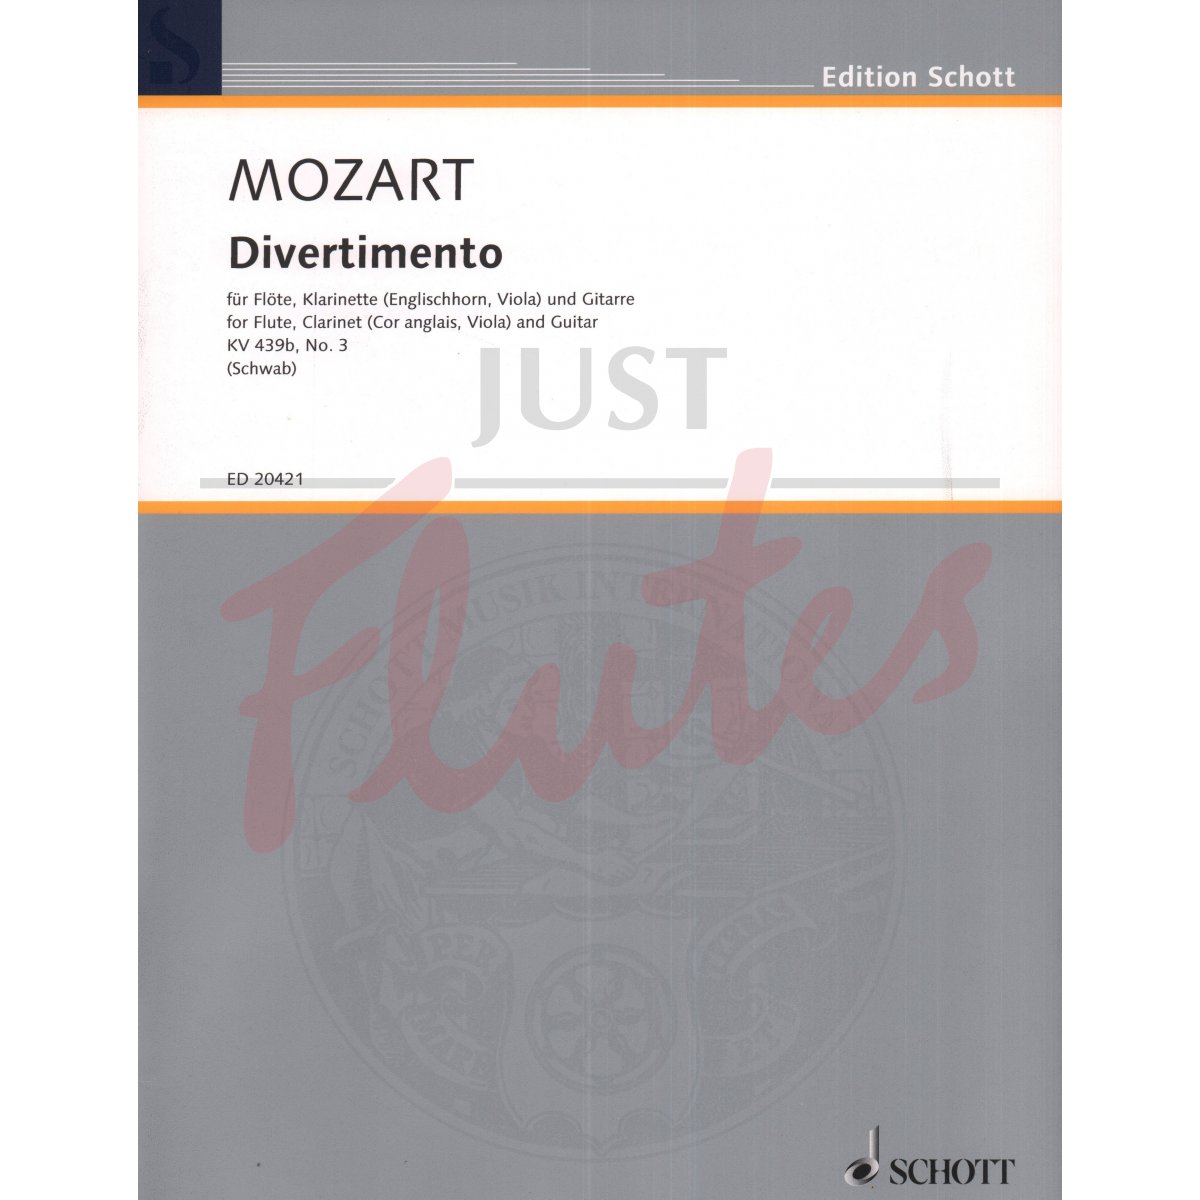 Divertimento No. 3 for Flute, Clarinet and Guitar